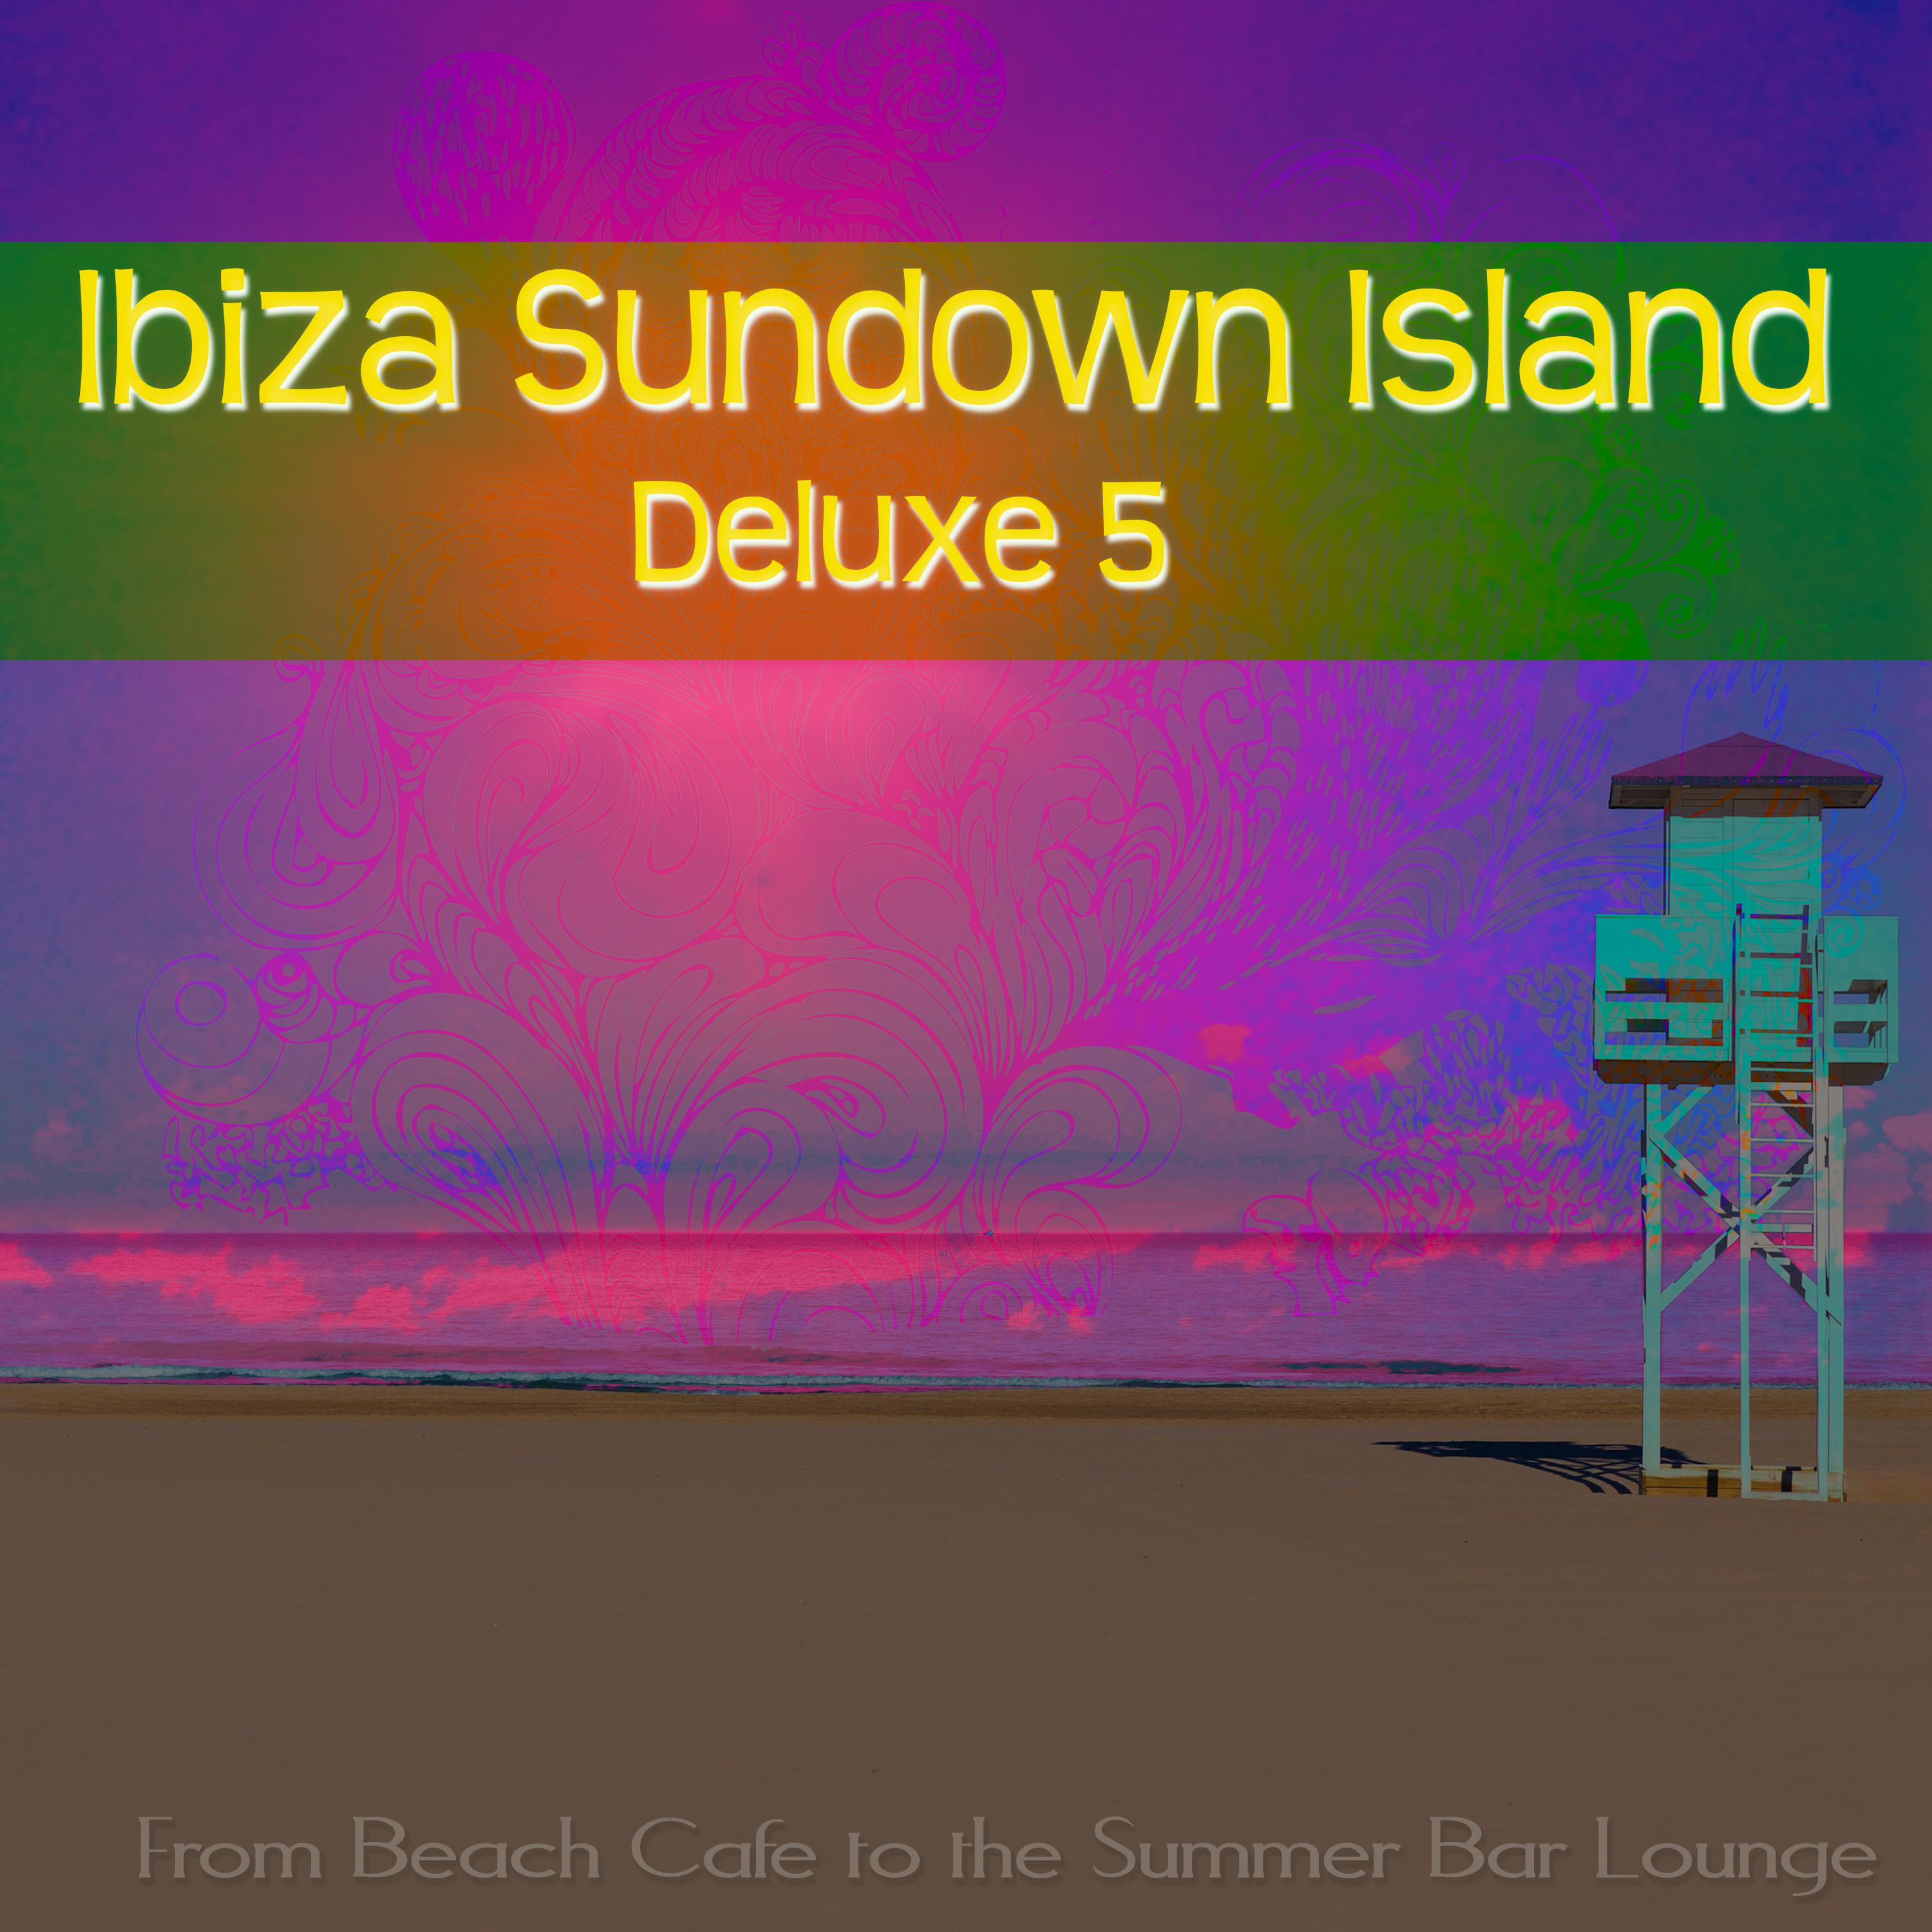 Ibiza Sundown Island Deluxe 5 (From Beach Cafe to the Summer Bar Lounge)